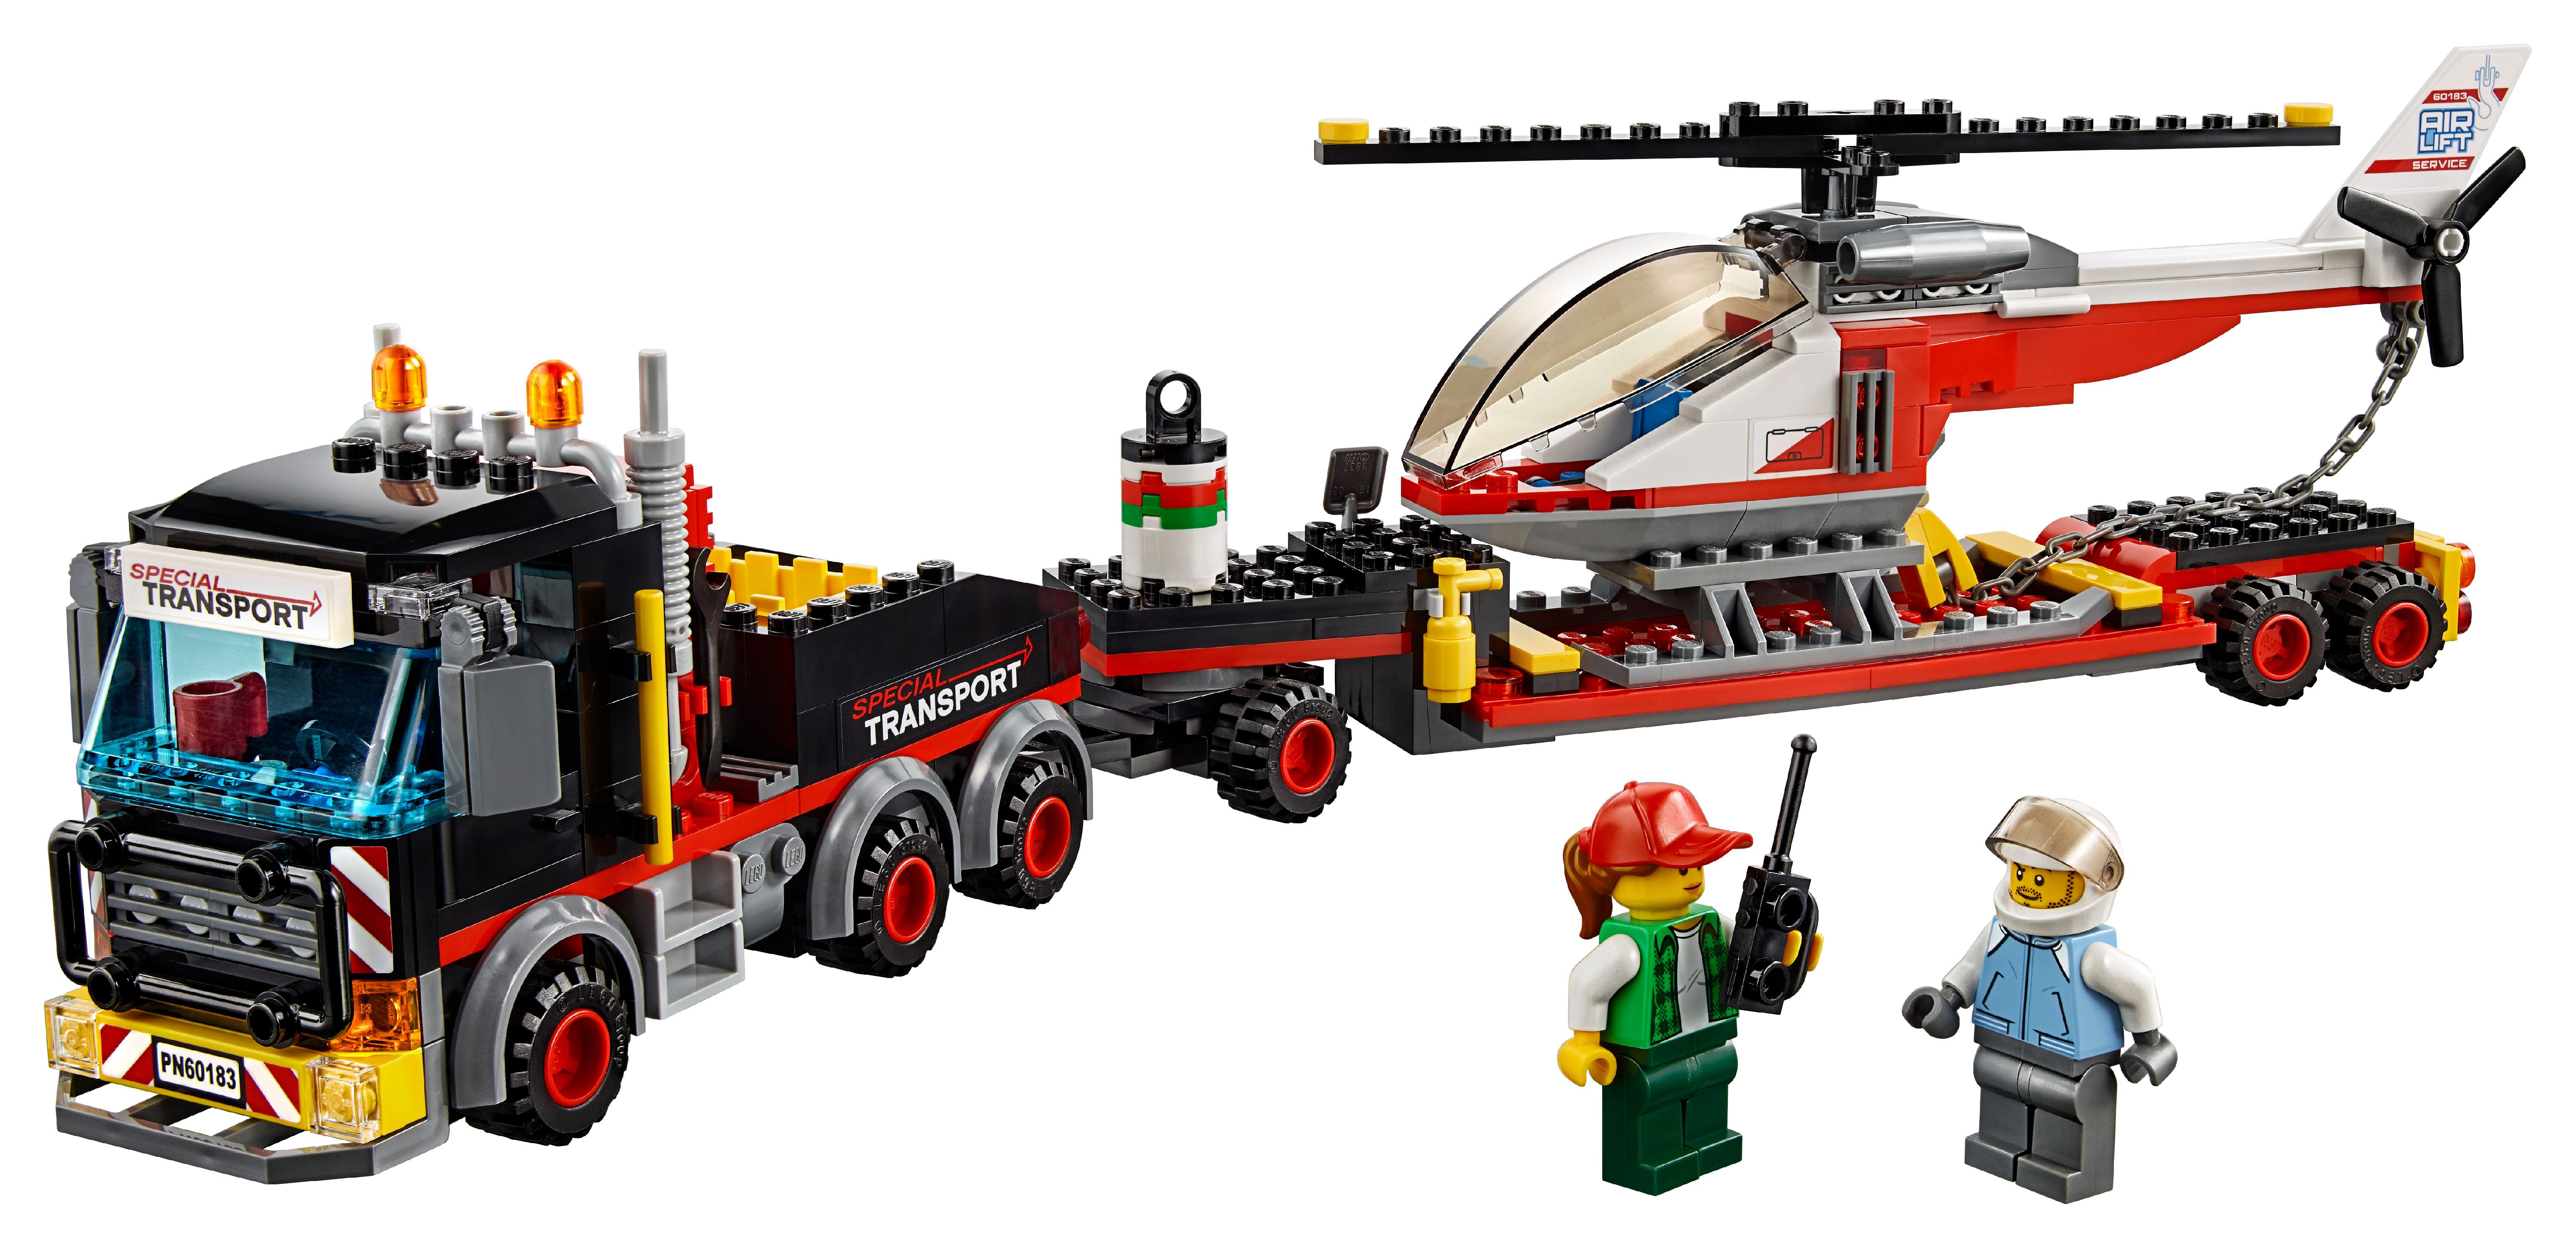 Lego City Heavy Cargo Transport 60183 Toy Truck Building - Walmart.com